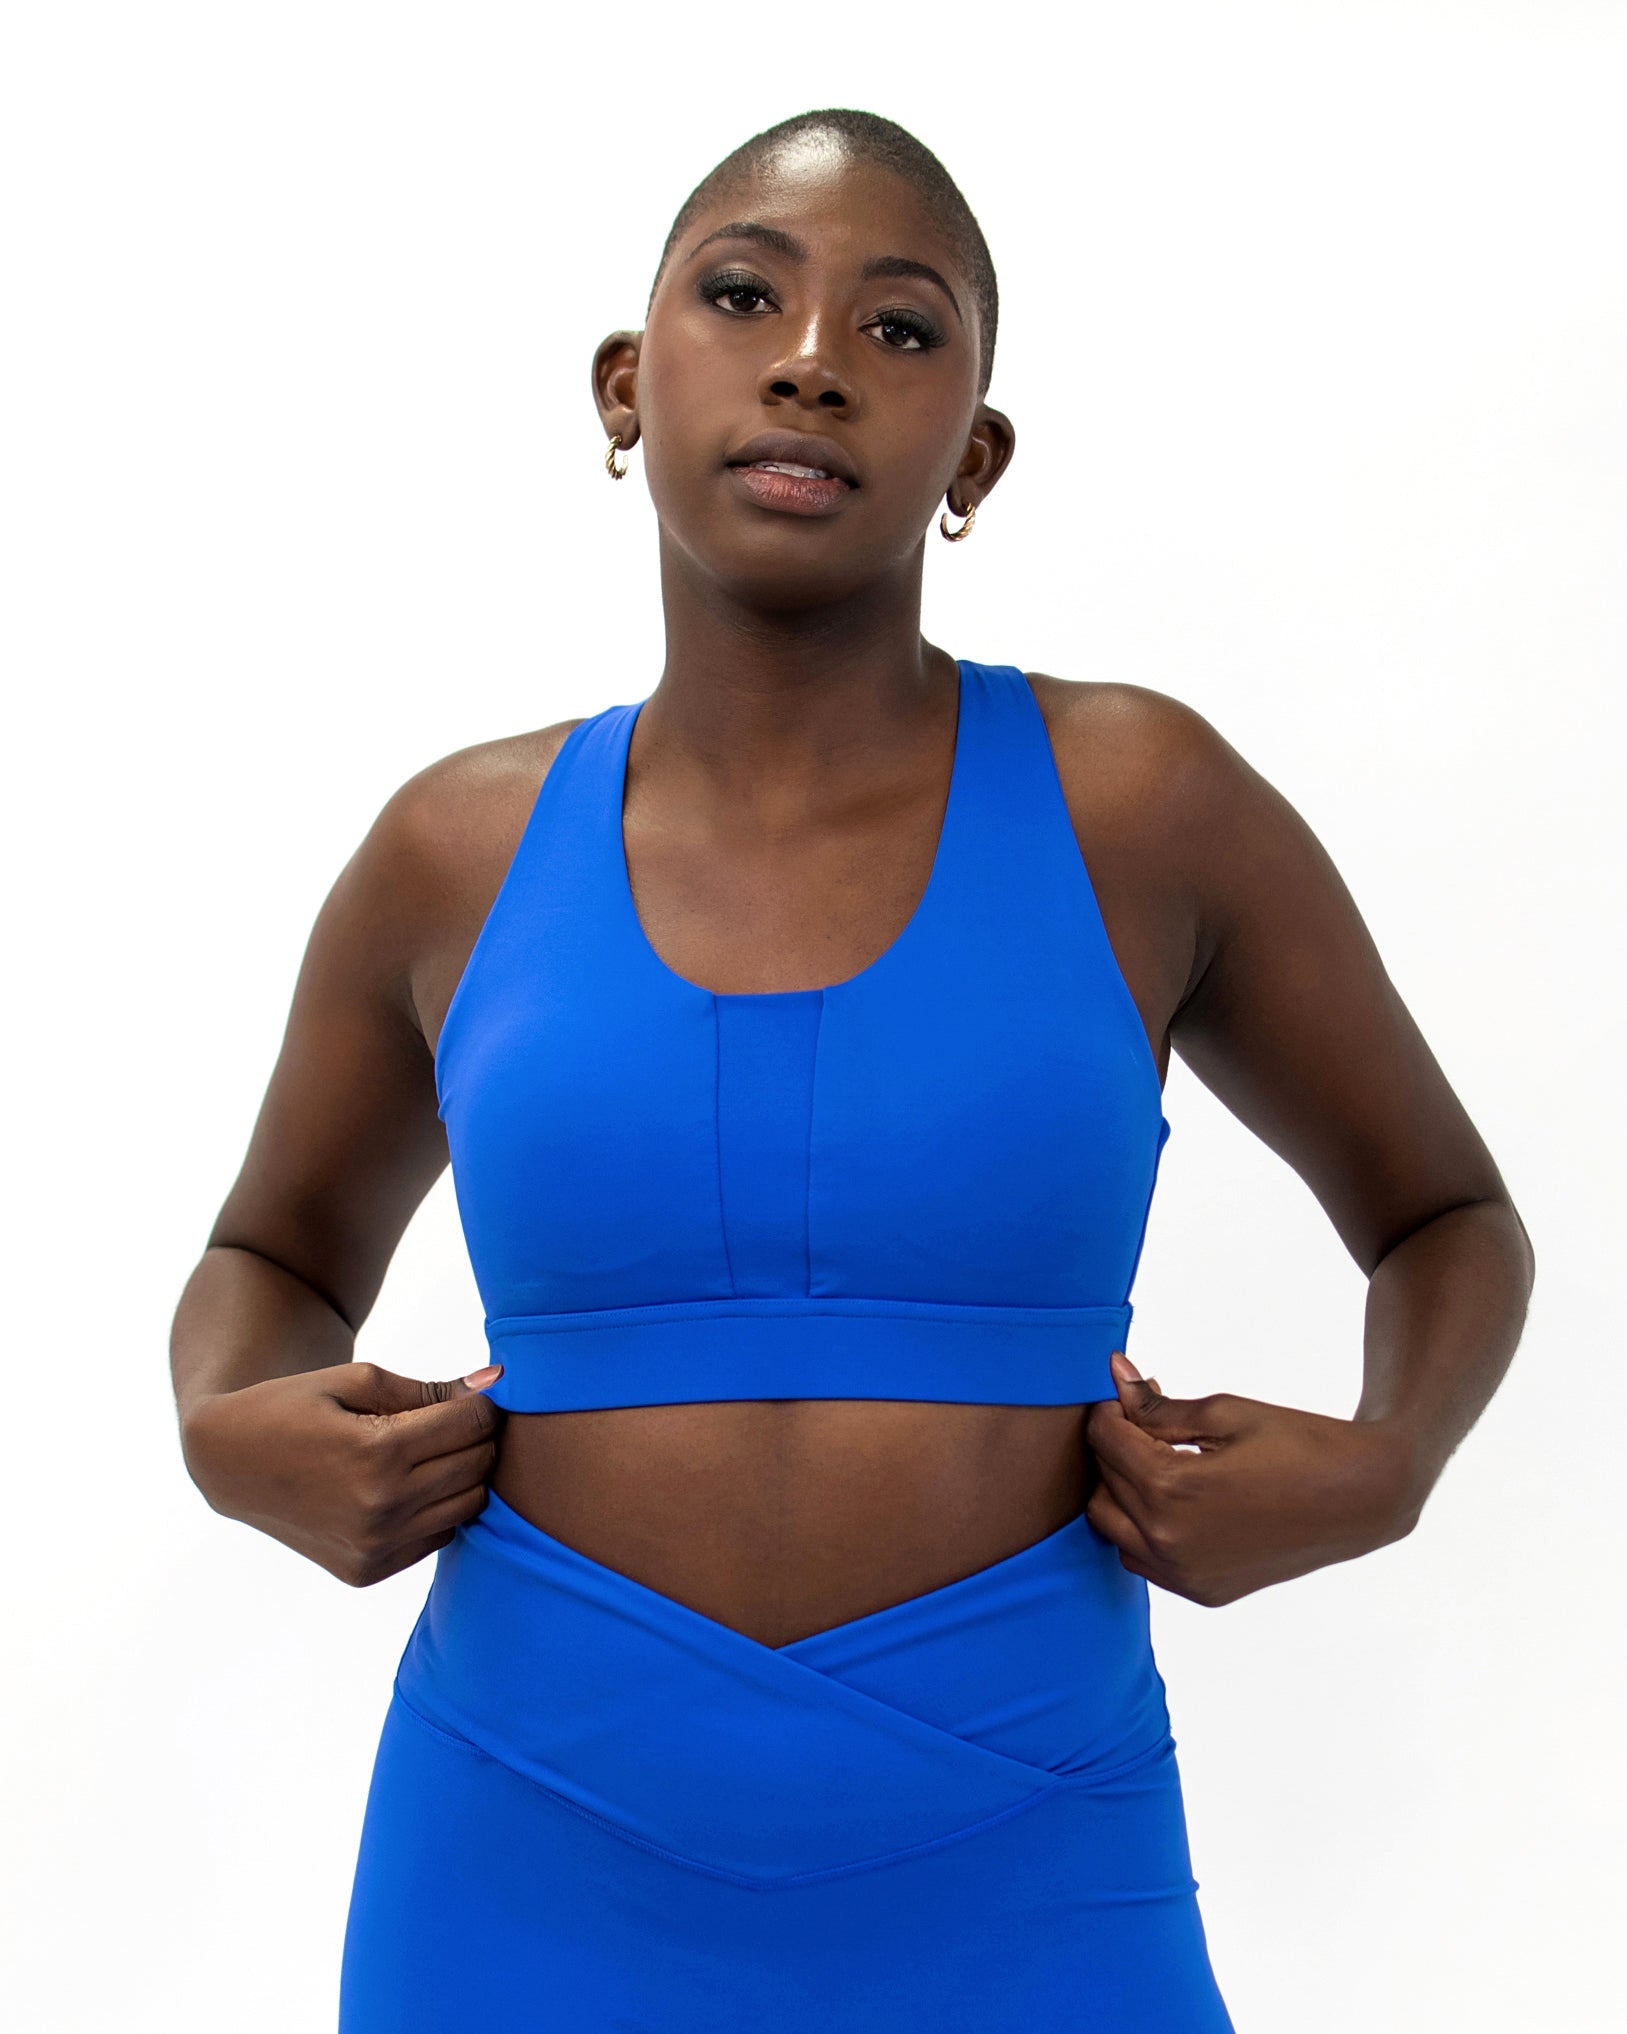 Nicole Extreme Sports Bra (2 colors) – Nikkib Sportswear